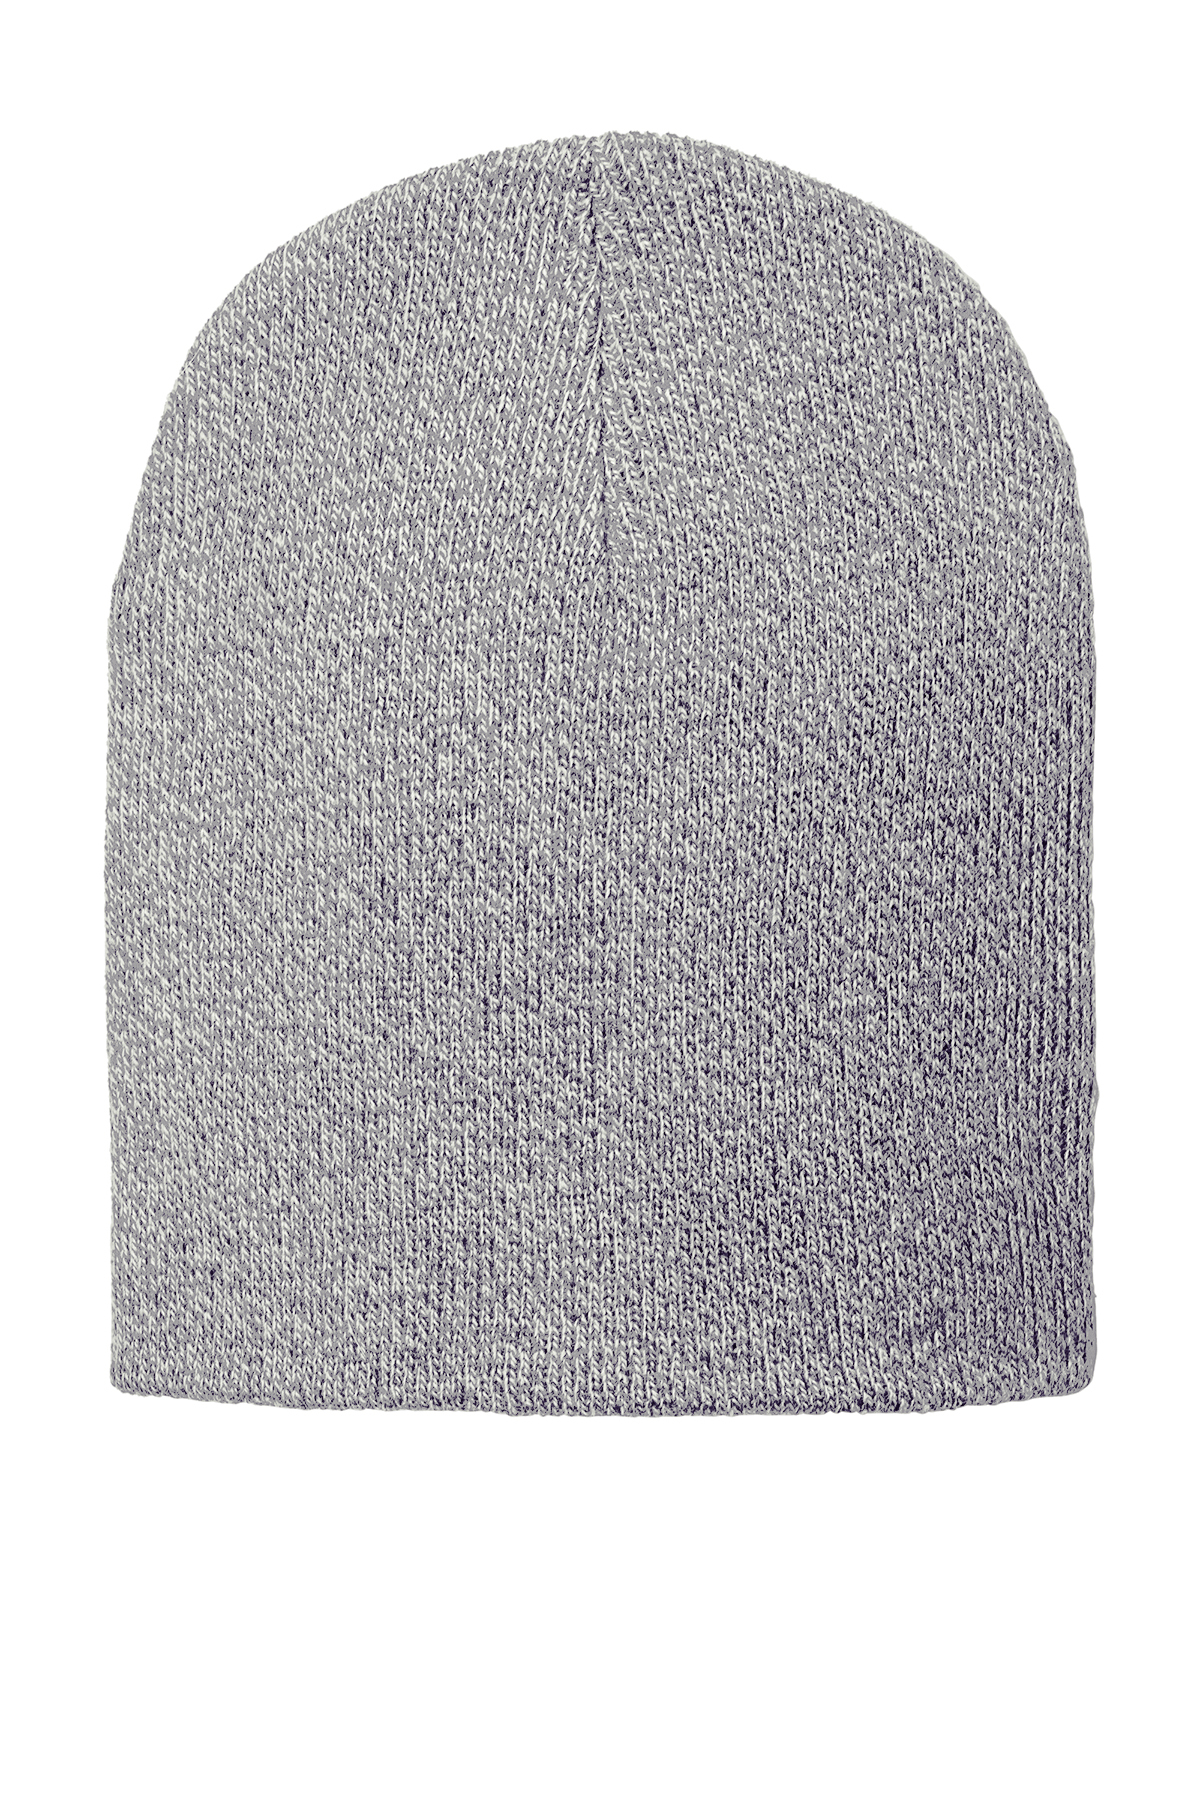 Carhartt Acrylic Knit Hat | Product | SanMar